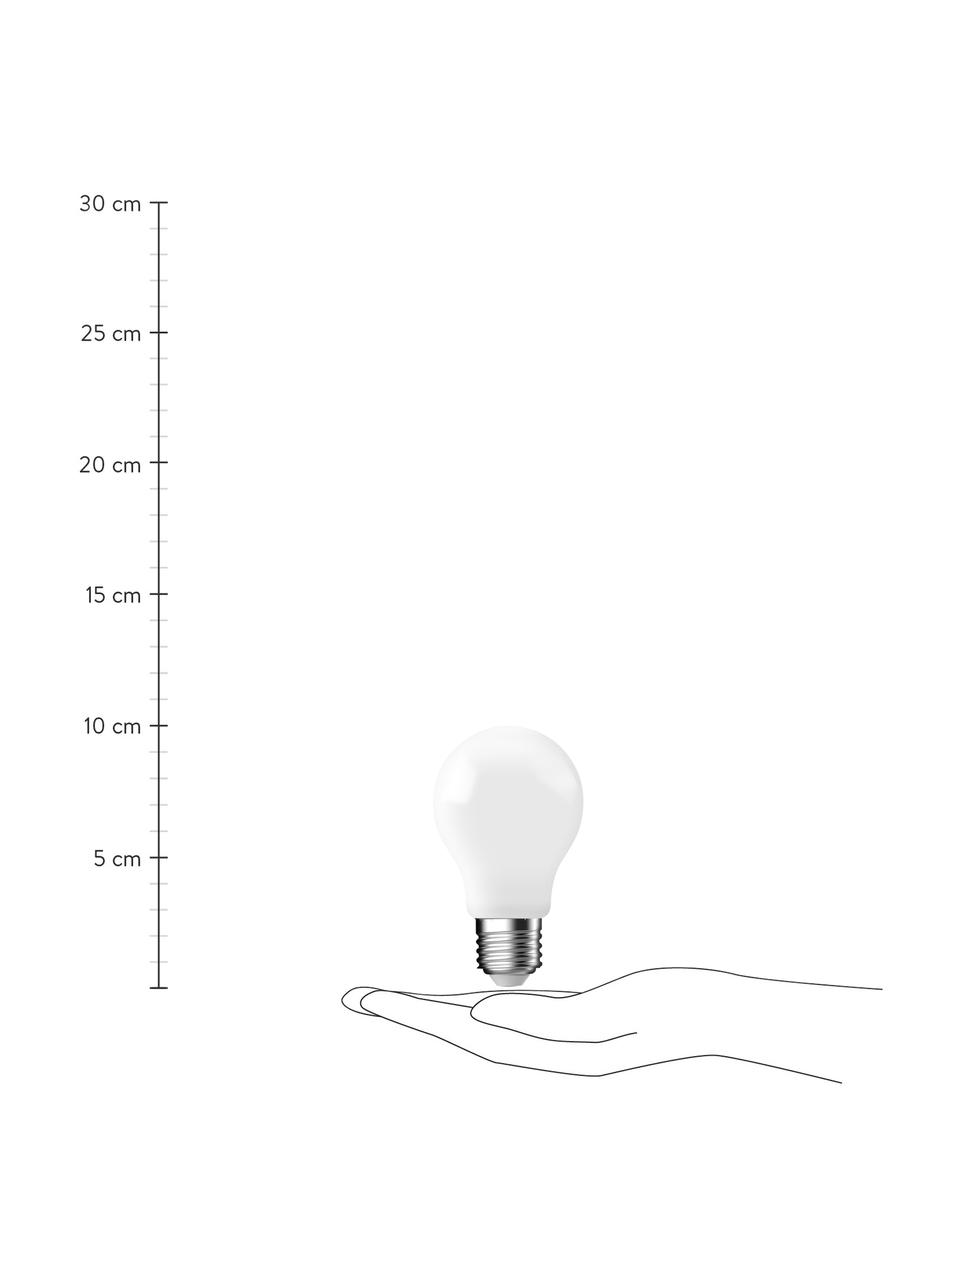 Lampadina E27, 1055lm, dimmerabile, bianco caldo, 7 pz, Paralume: vetro, Base lampadina: alluminio, Bianco, Ø 6 x Alt. 10 cm